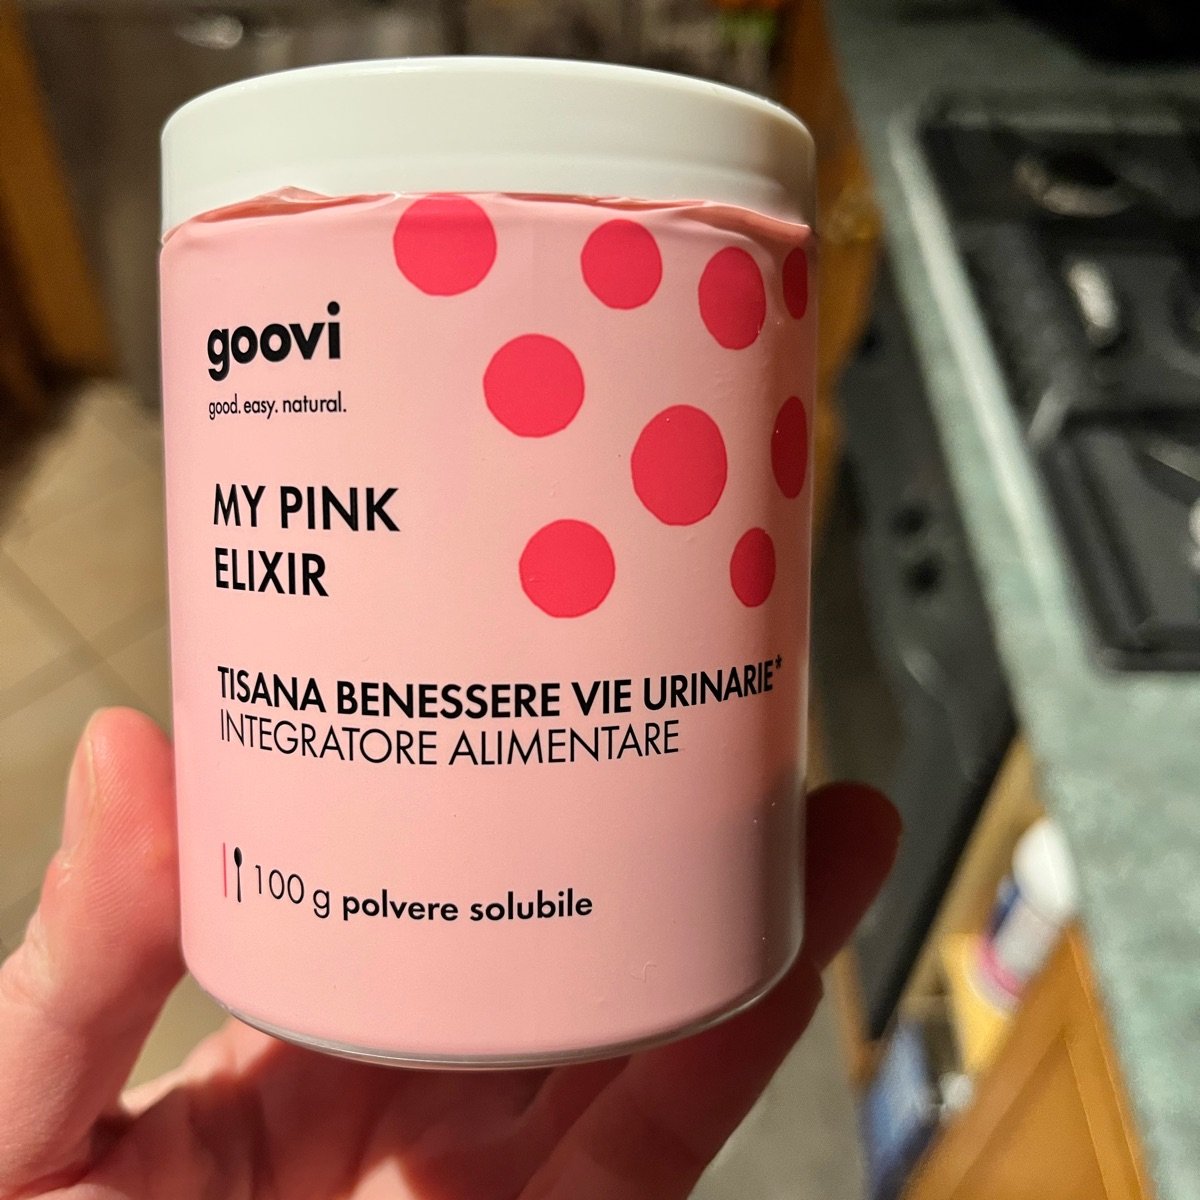 Goovi My Pink elixir tisana vie urinarie Reviews | abillion